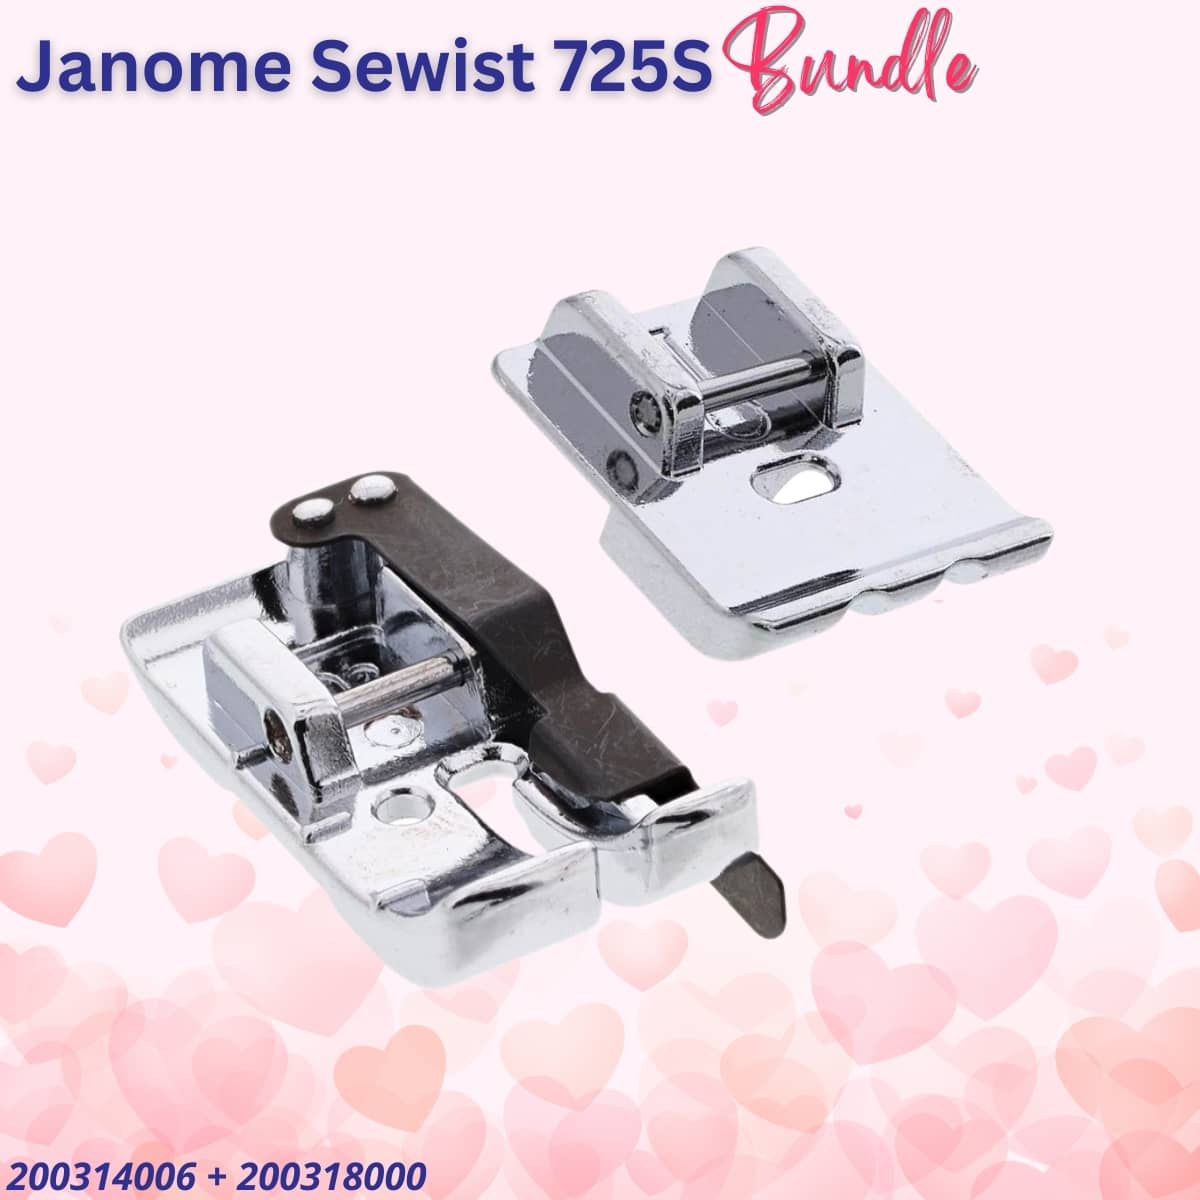 Janome Sewist 725S bundle for Valentine's Sale